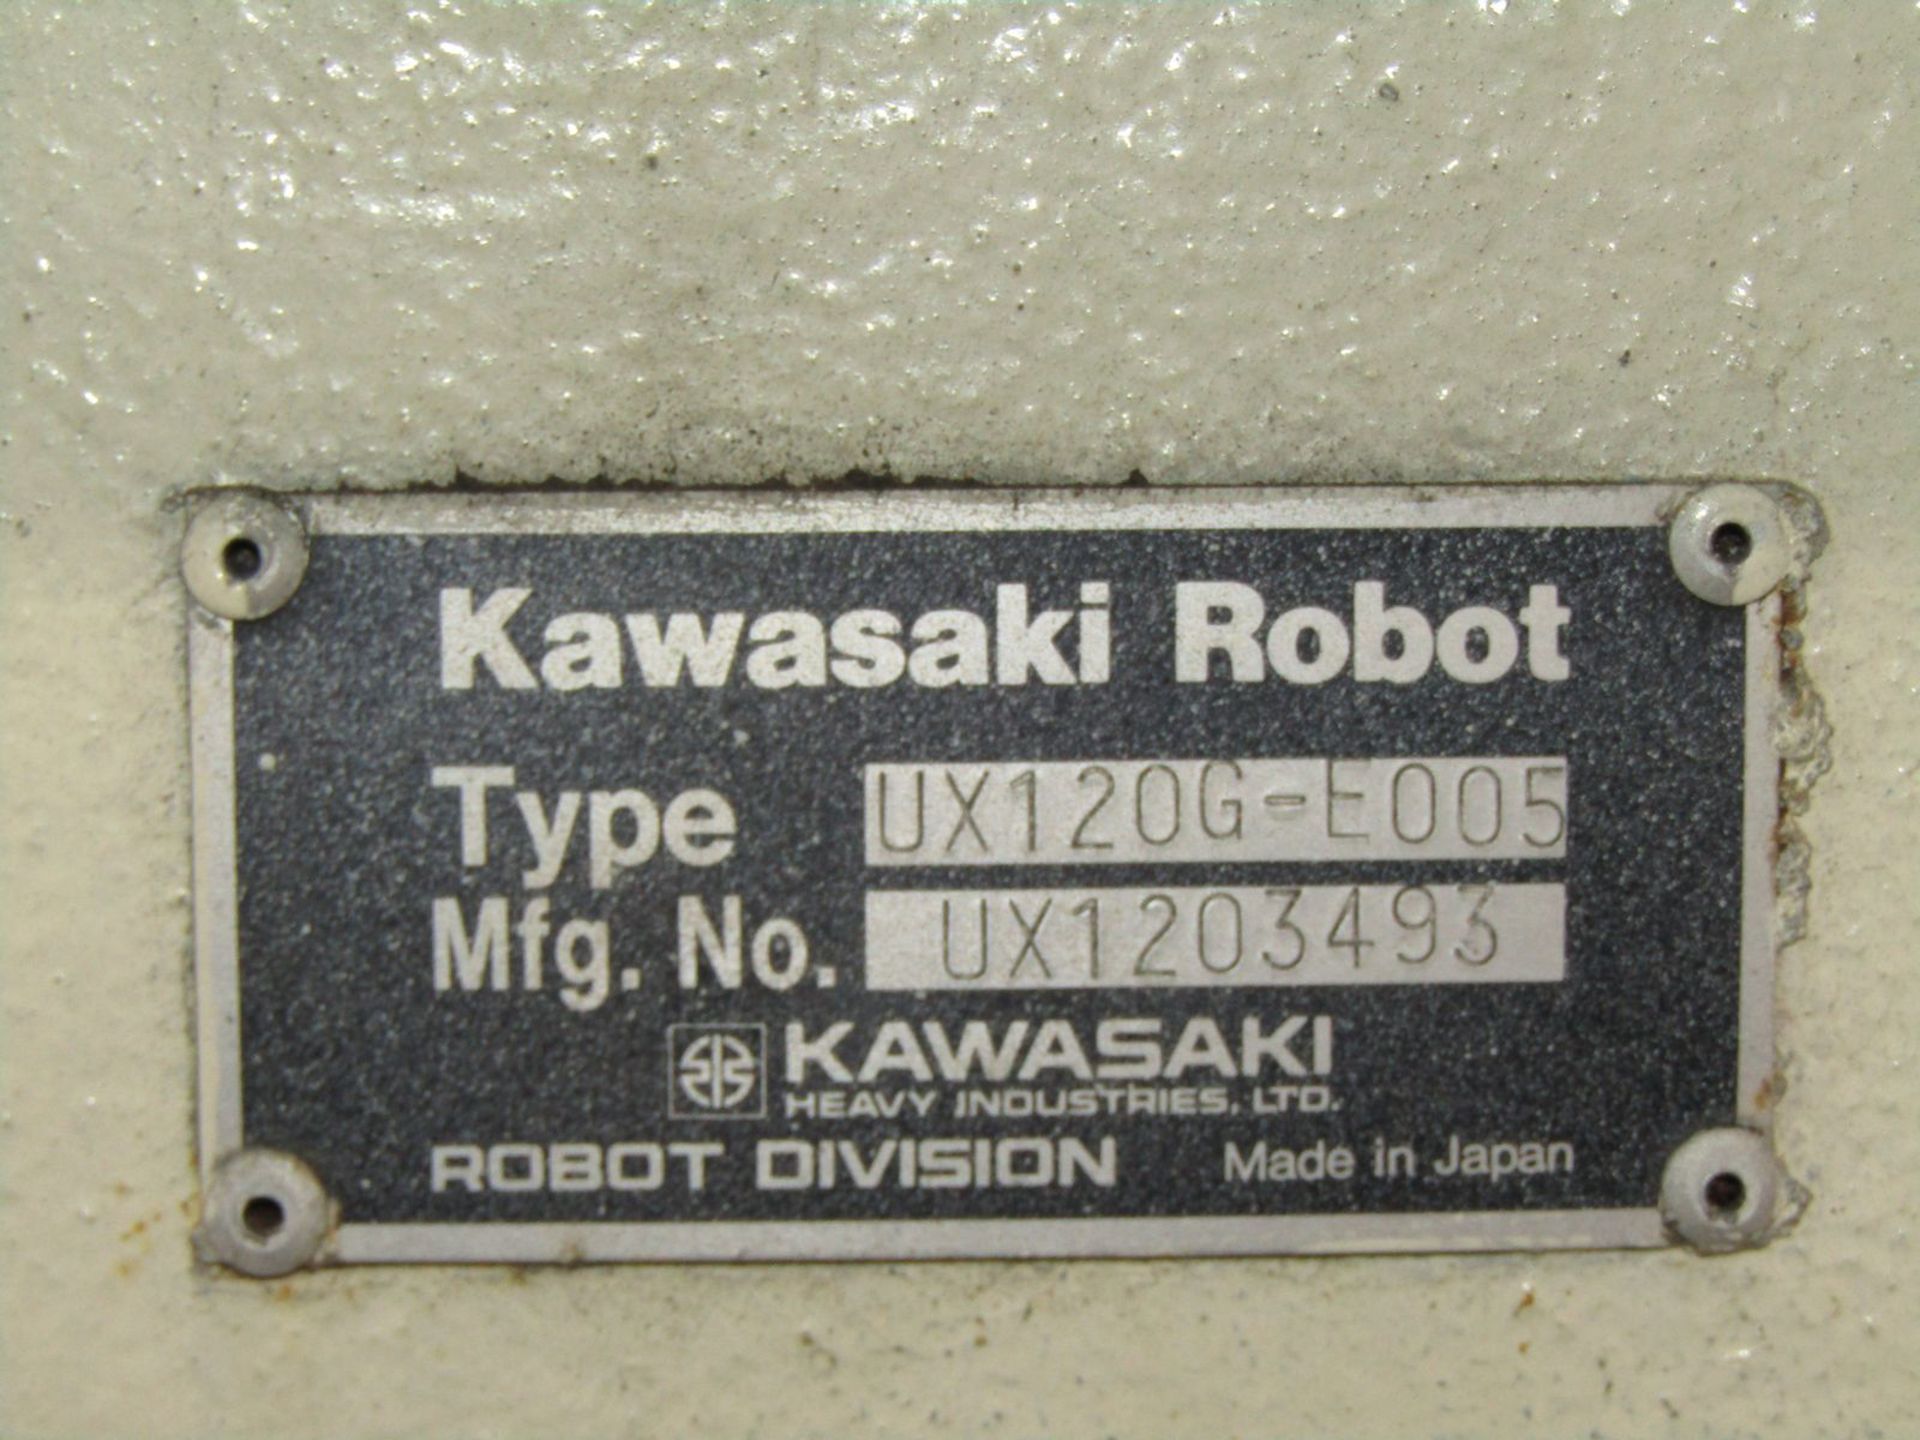 Kawasaki 6-Axis Model UX120G-E005 Robot, S/N: UX1203493 (2002); with Model C52G-B221 Controller - Image 3 of 5